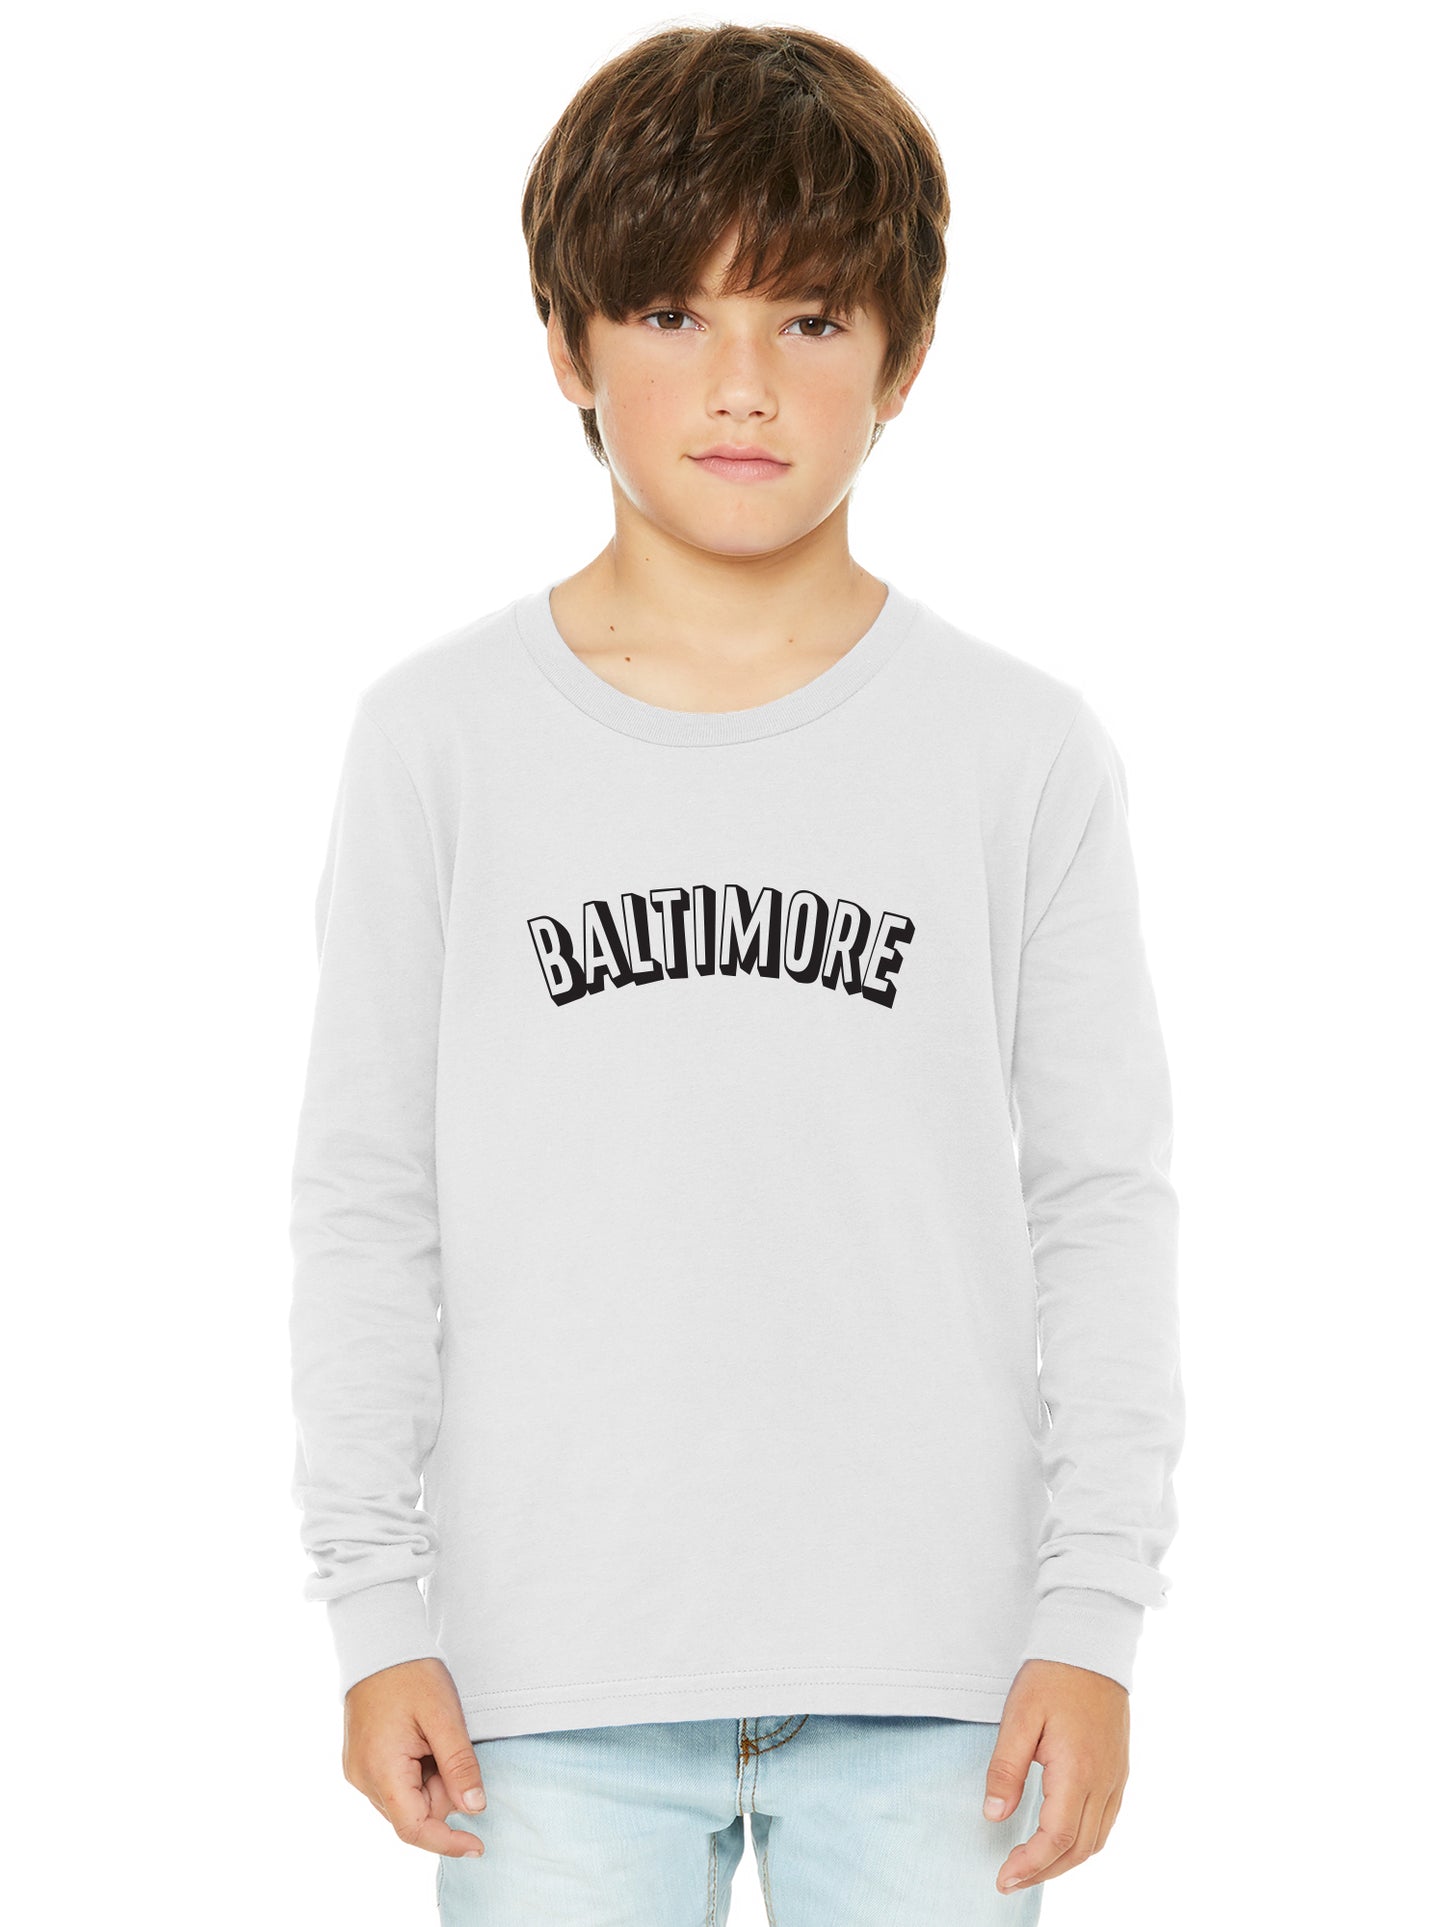 Daxton Youth Long Sleeve Baltimore Basic Tshirt